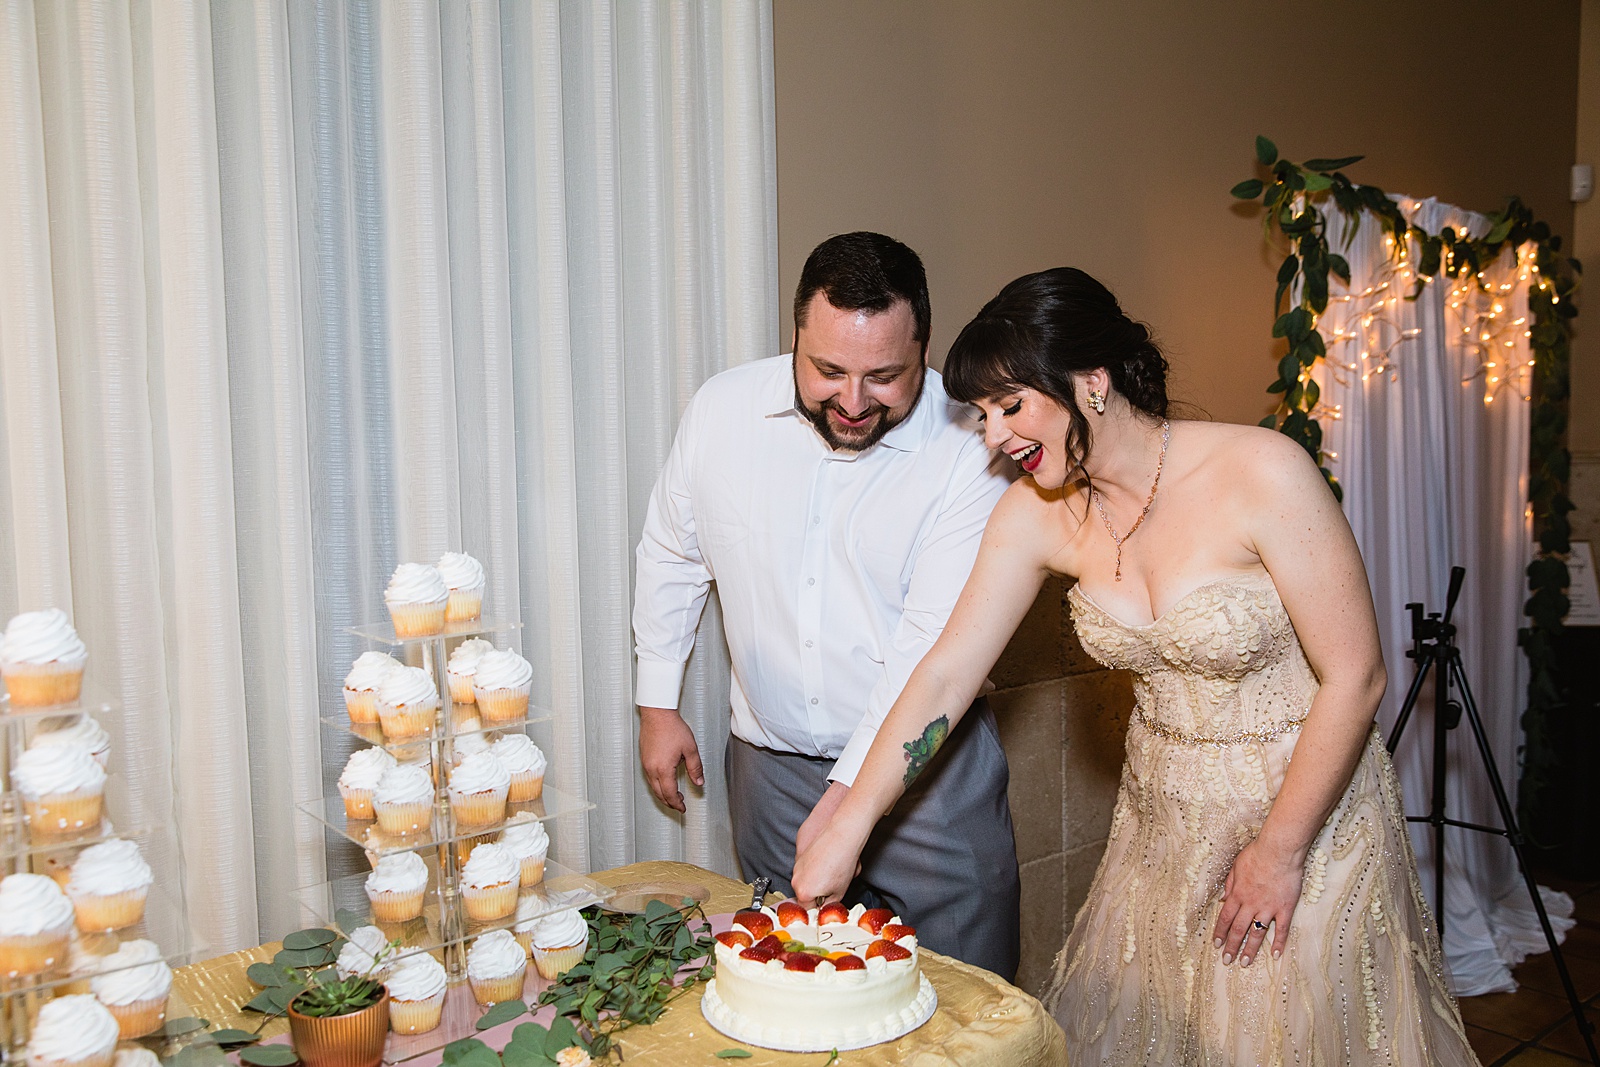 Bride and Groom cutting their wedding cake at their Bella Rose Estate wedding reception by Arizona wedding photographer PMA Photography.